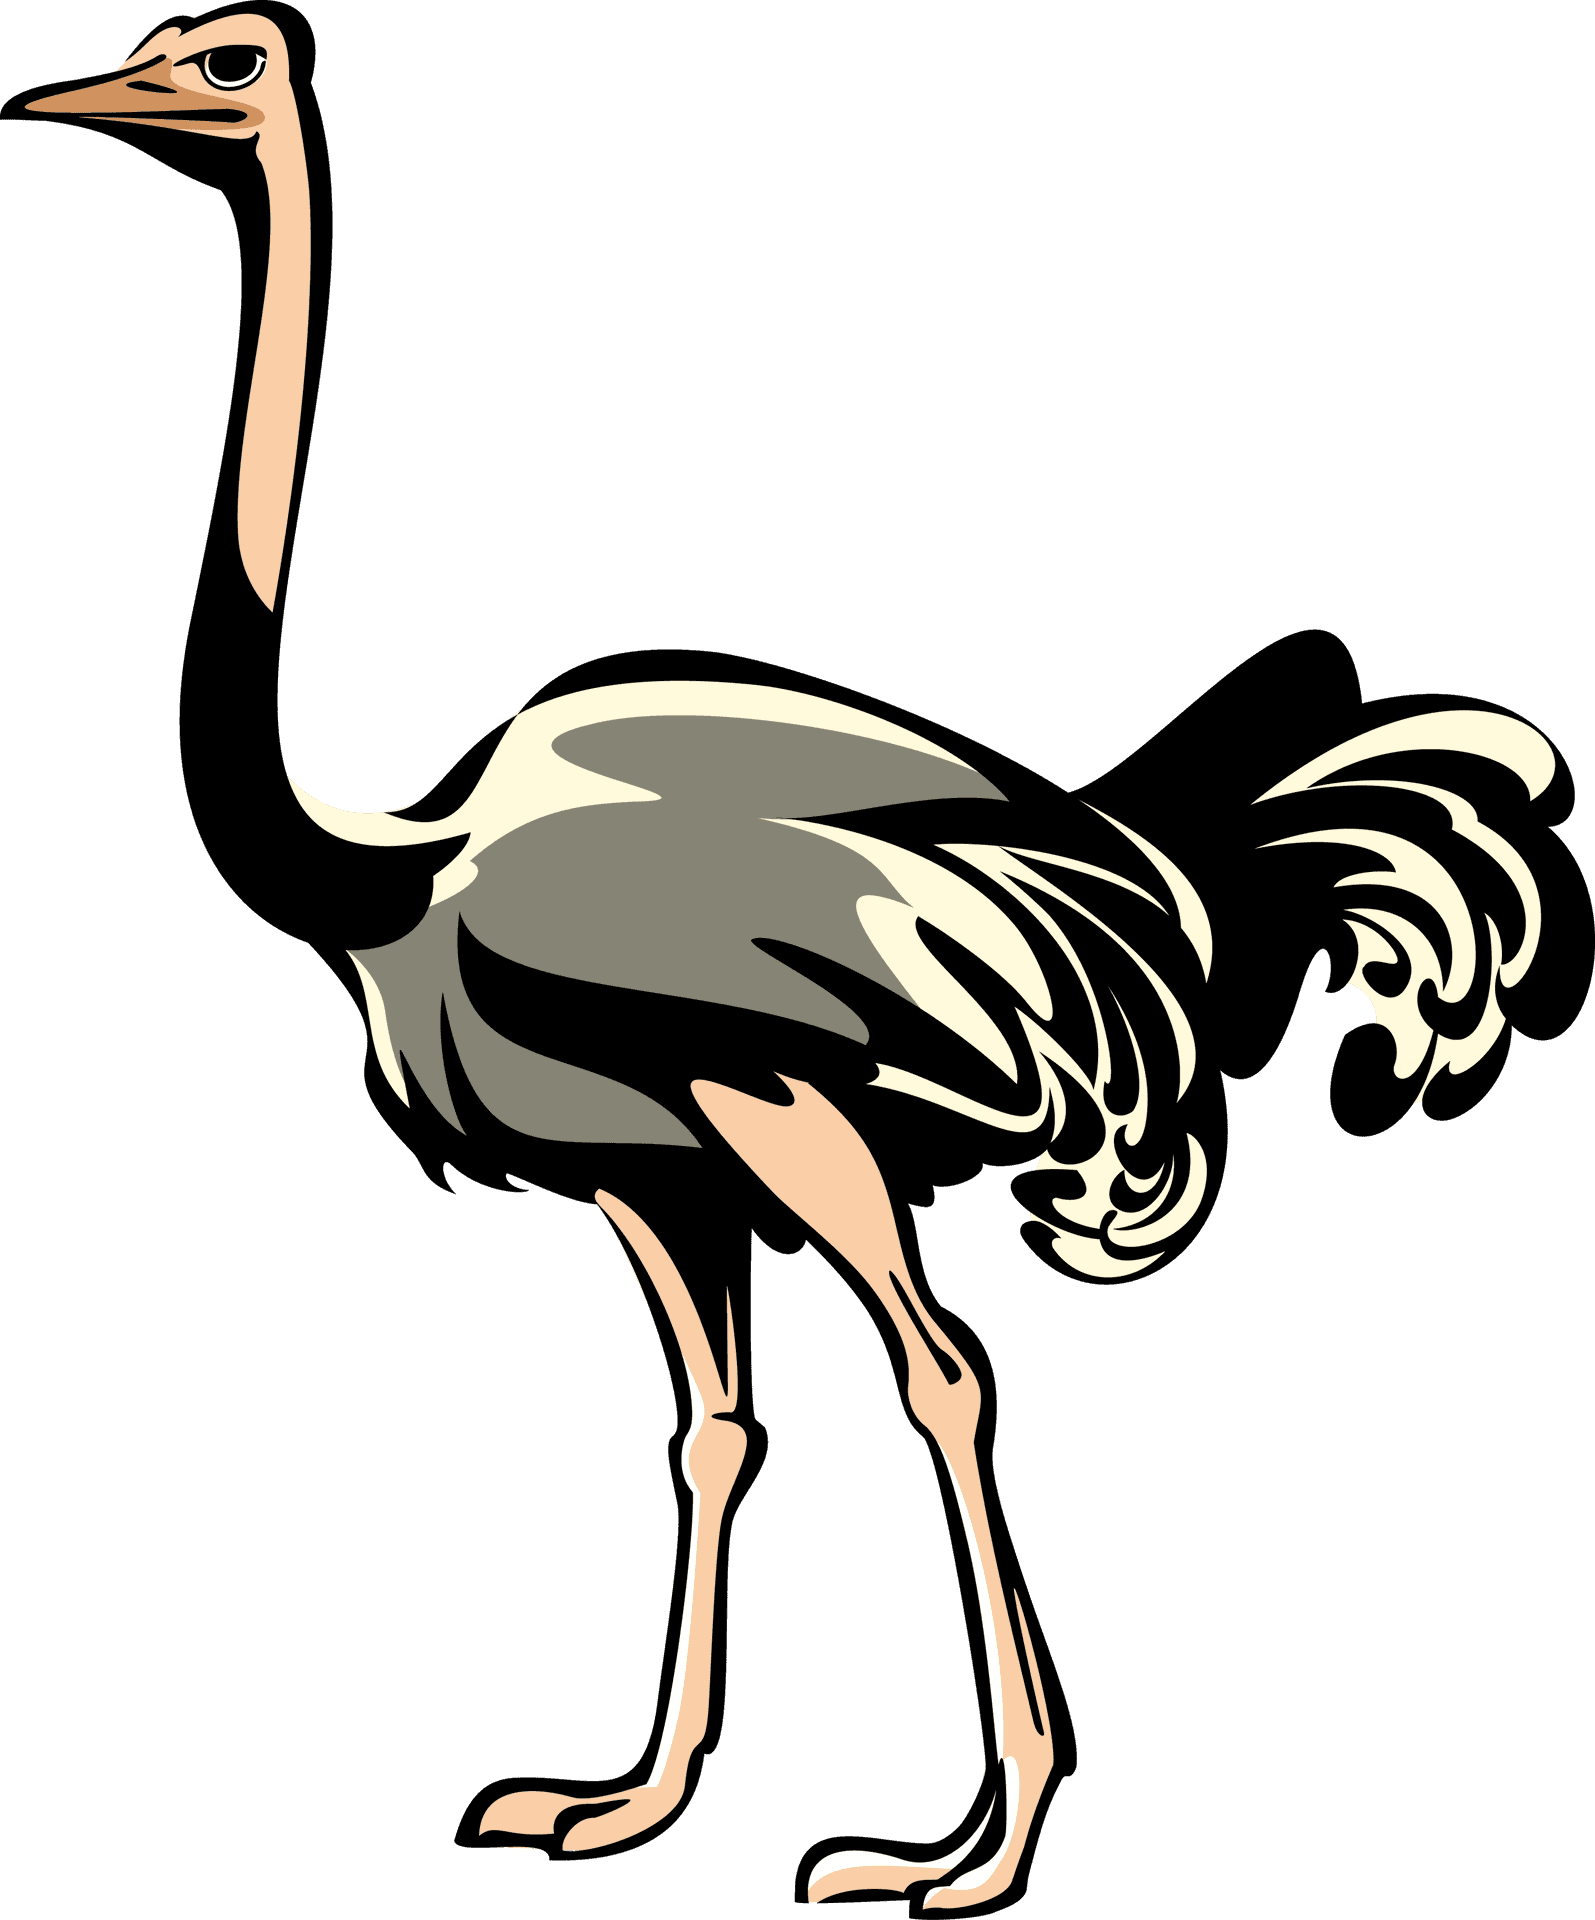 Stylized Ostrich Illustration PNG image